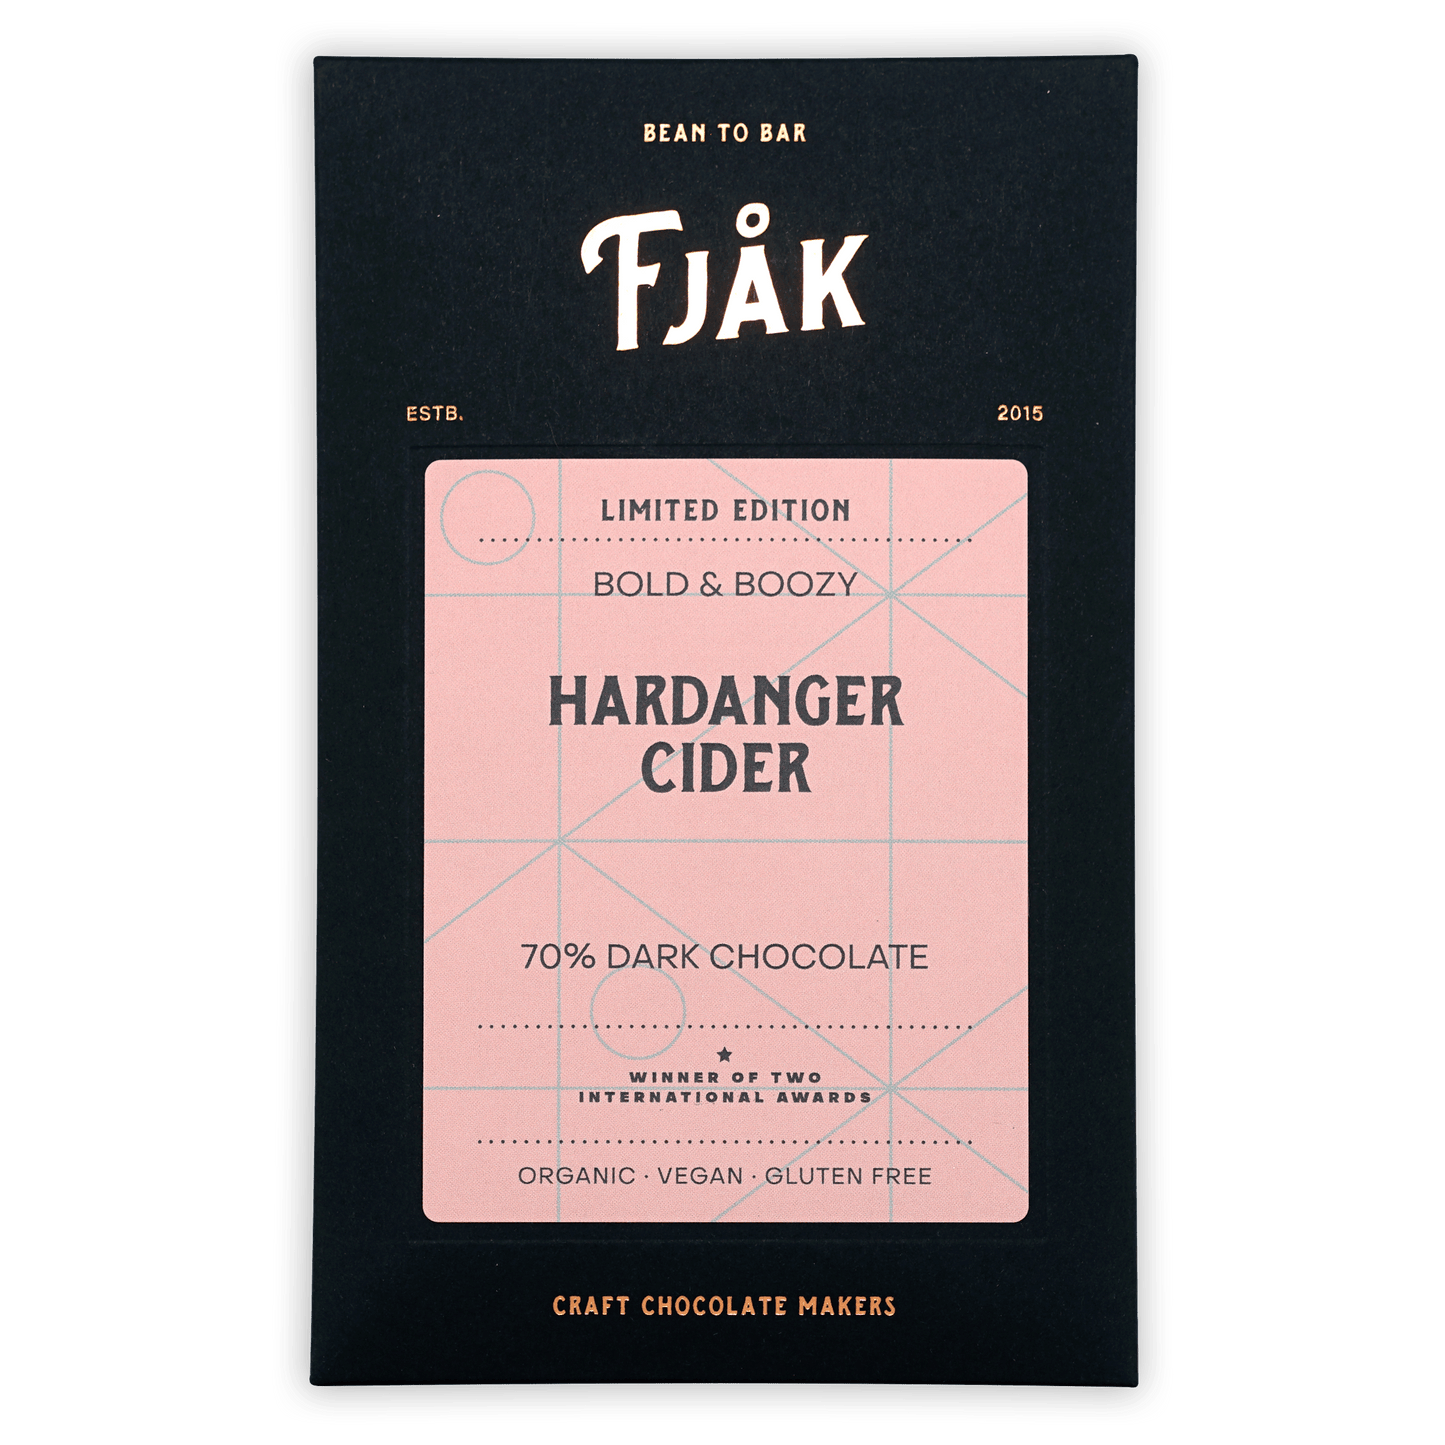 Fjåk Dark Chocolate & Cider 70% (Limited Edition)